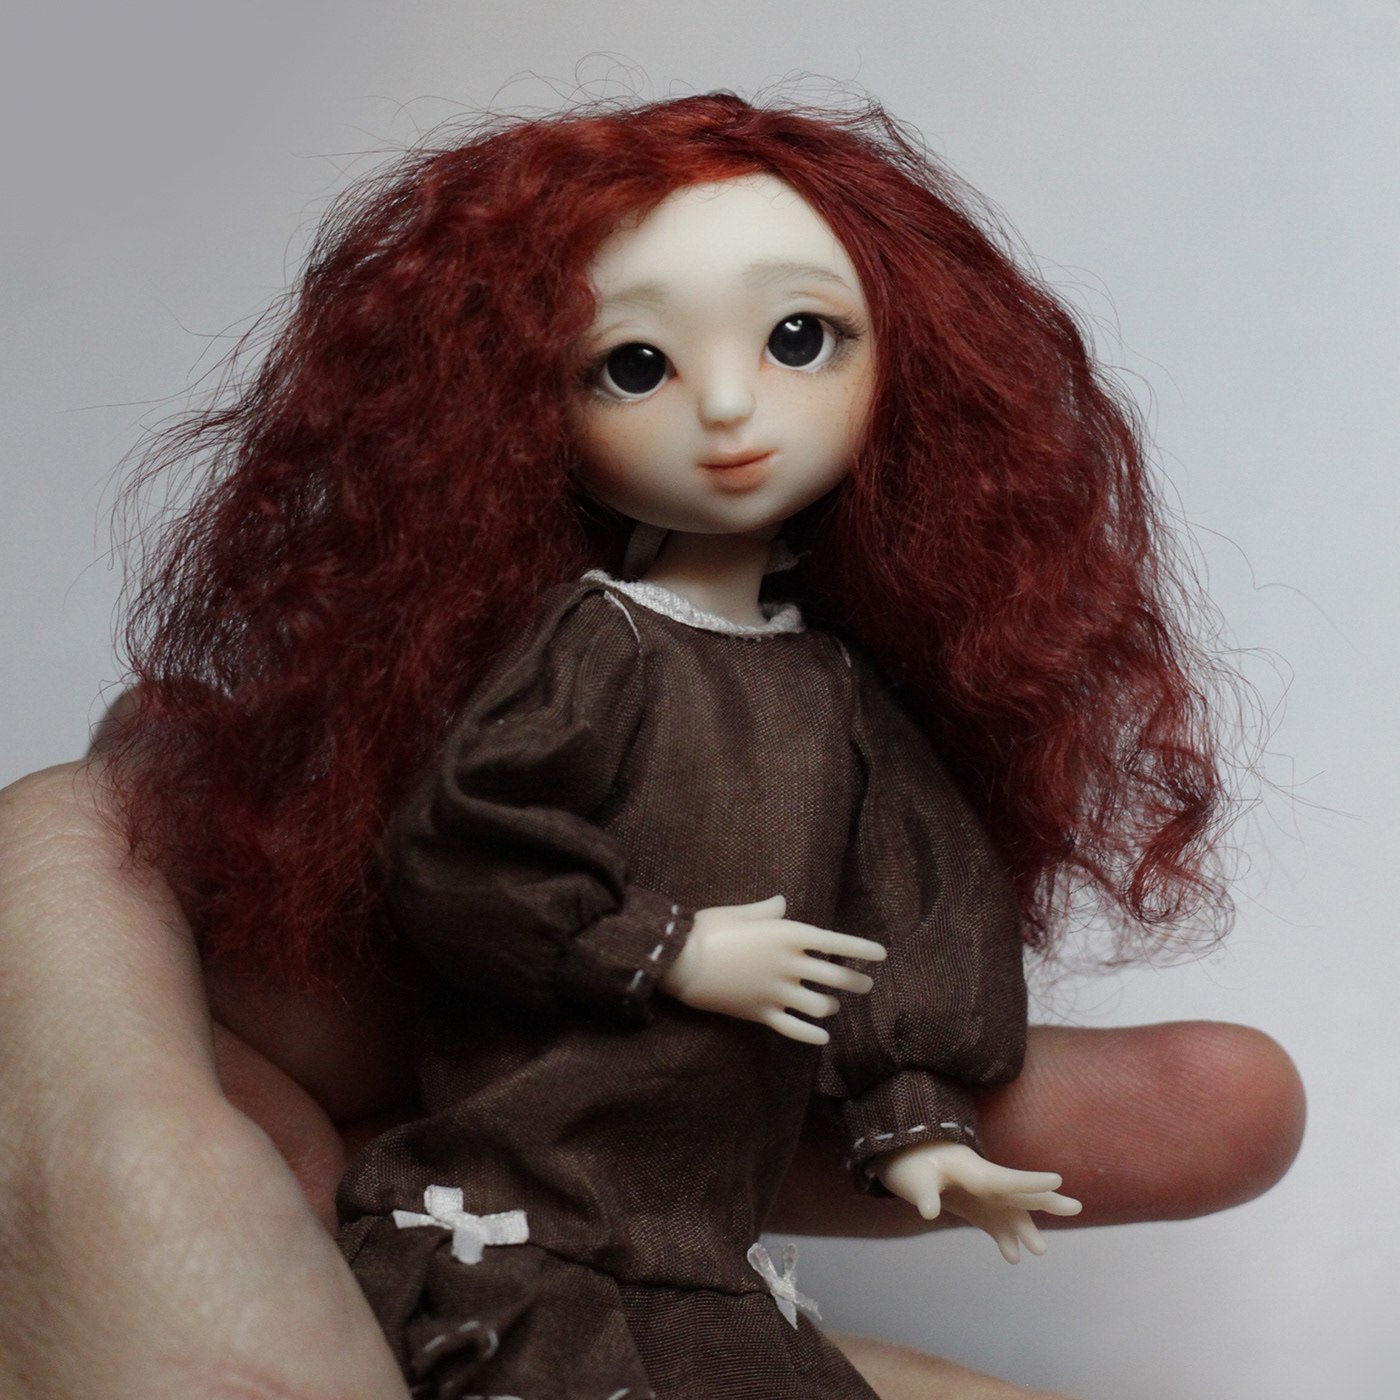 bjd balljointeddoll doll resin toy design Artdoll collectibles gift